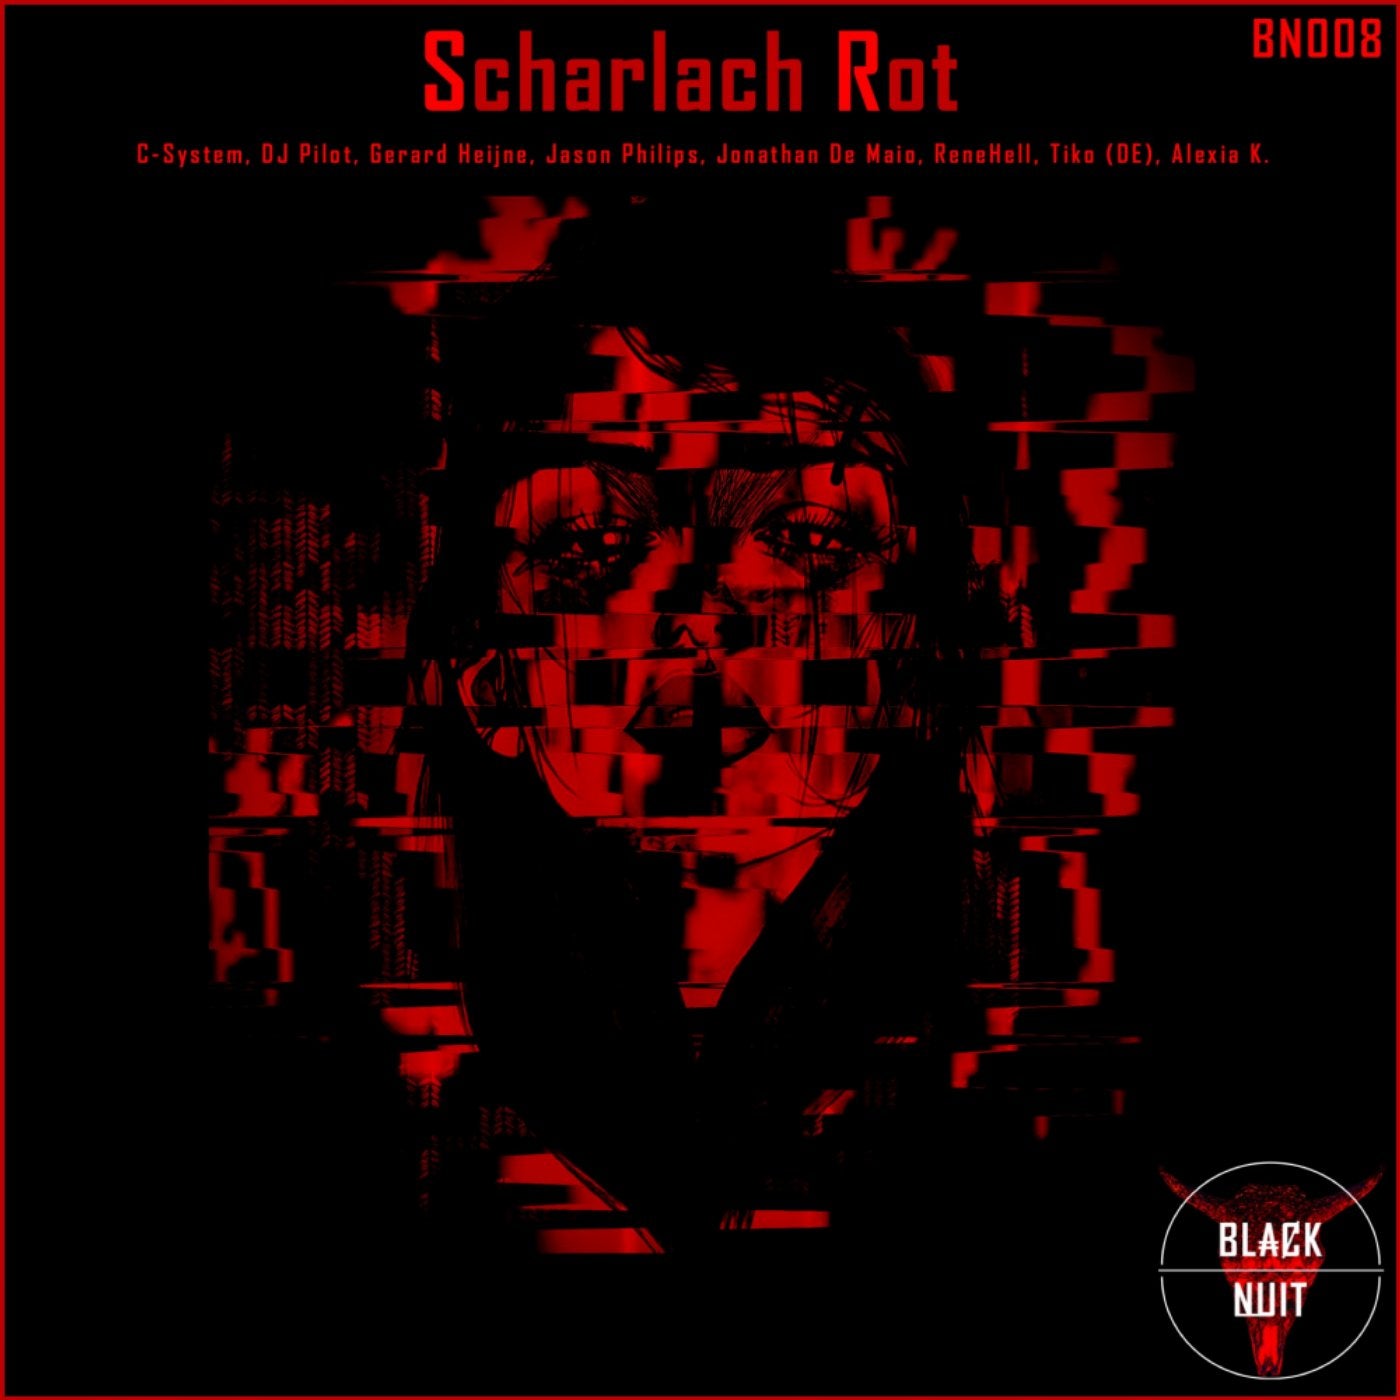 Scharlach Rot